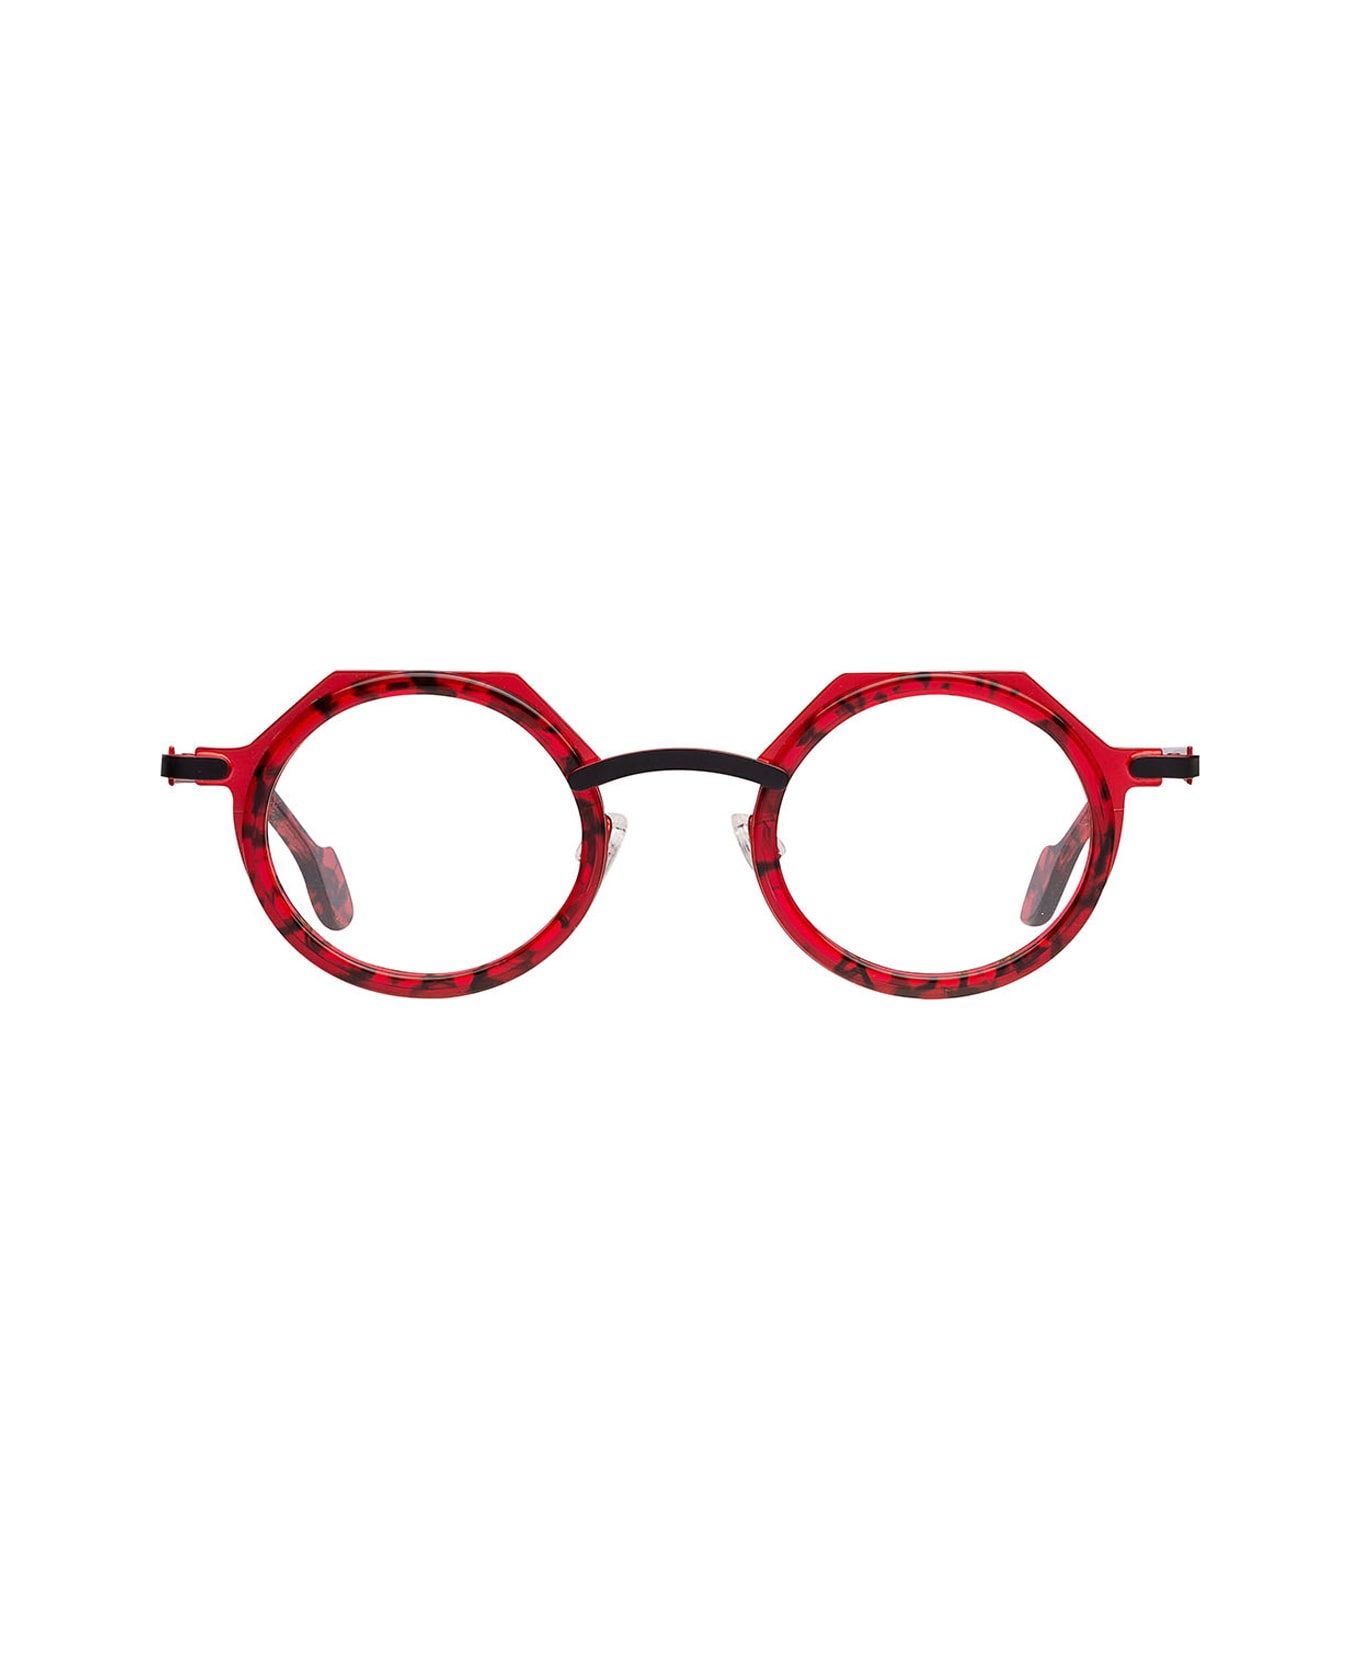 Matttew Ippon 7 Glasses - Rosso アイウェア